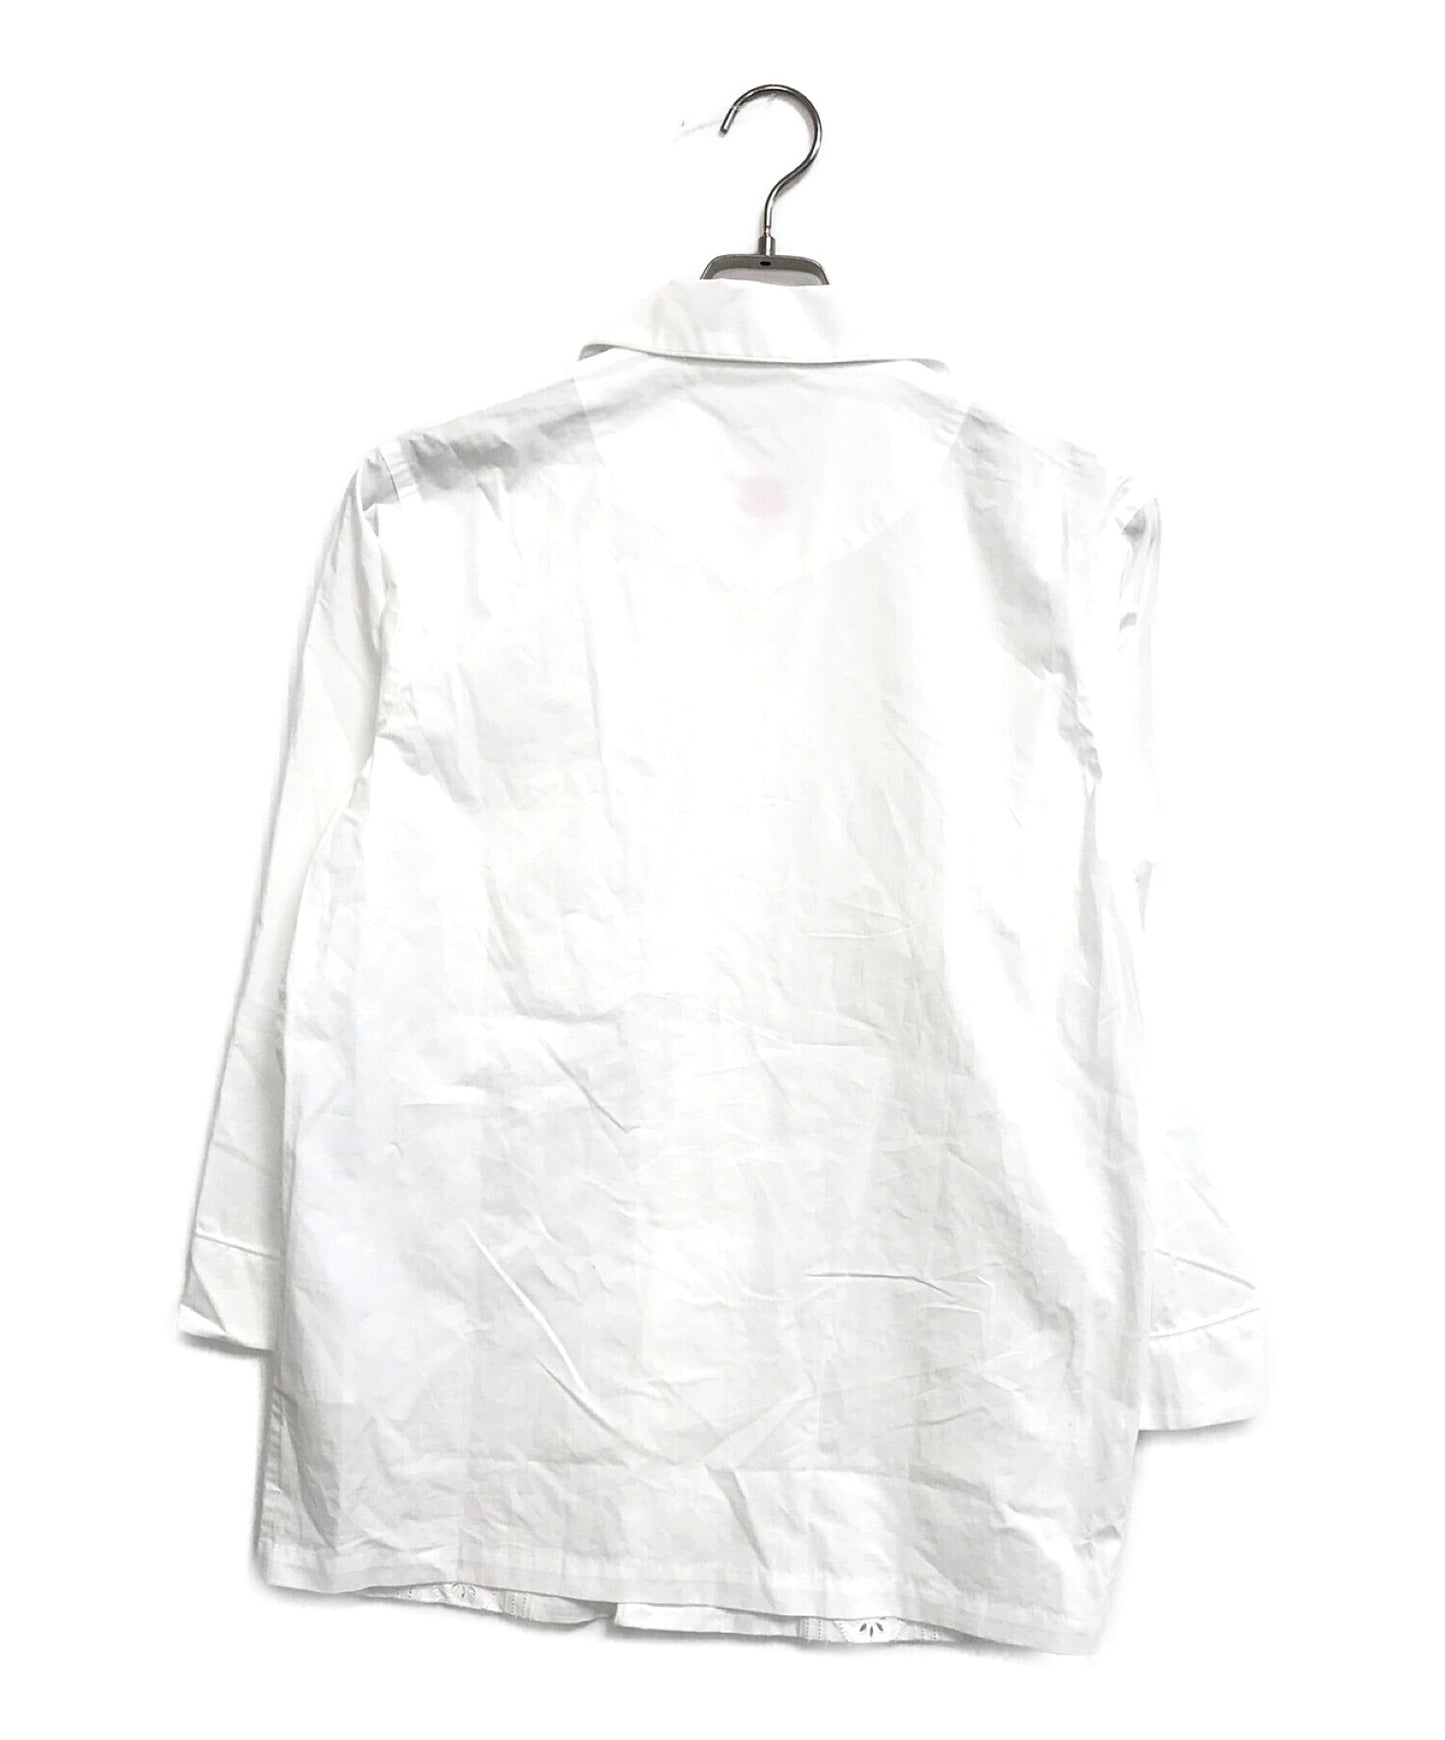 Tao Comme des Garcons 아일릿 자수 파자마 셔츠 ti-b021